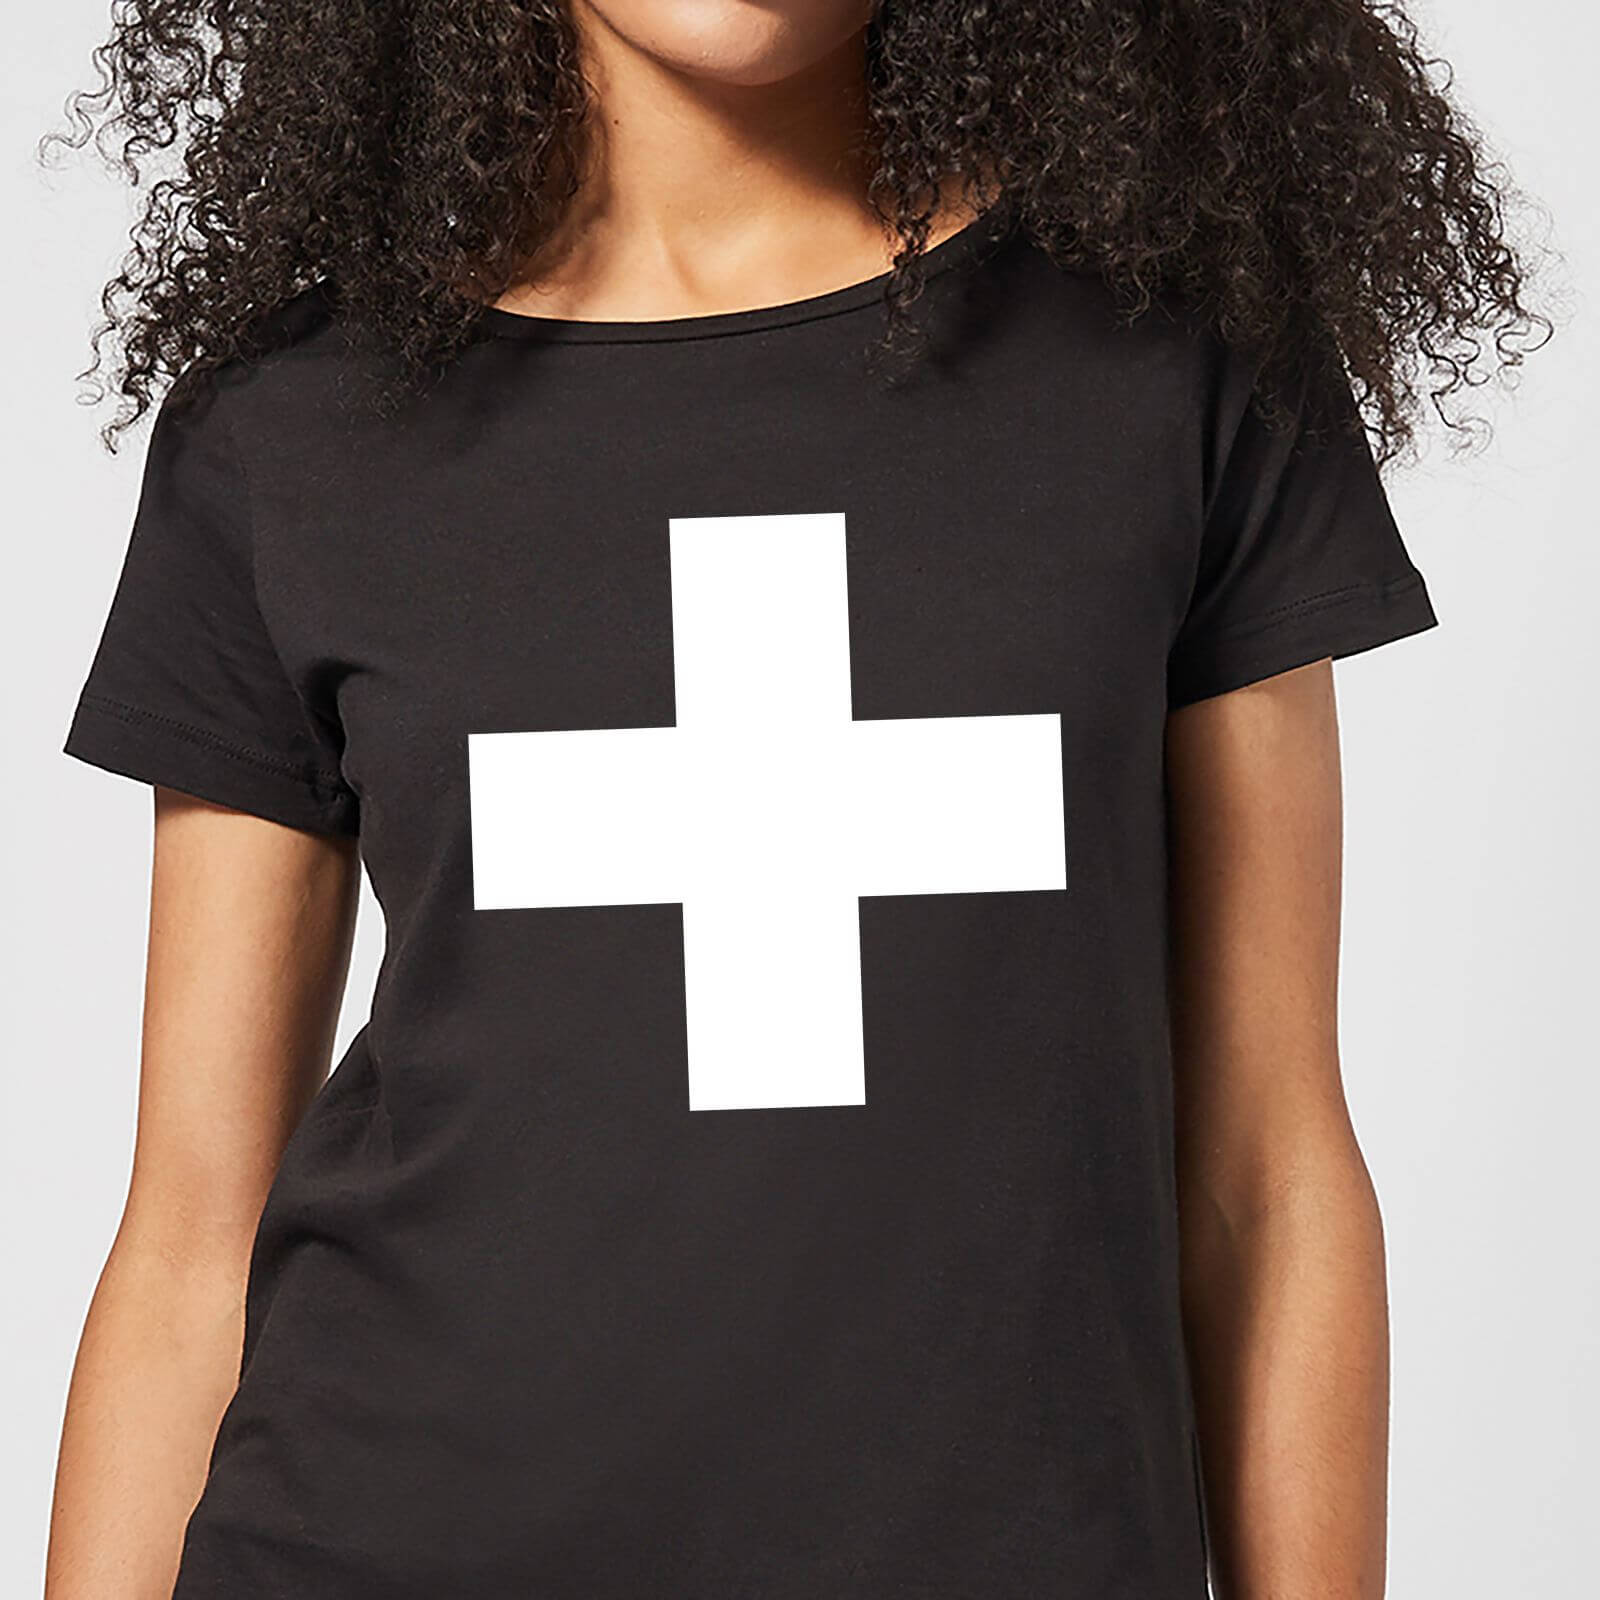 The Motivated Type Swiss Cross Women's T-Shirt - Black - S - Black